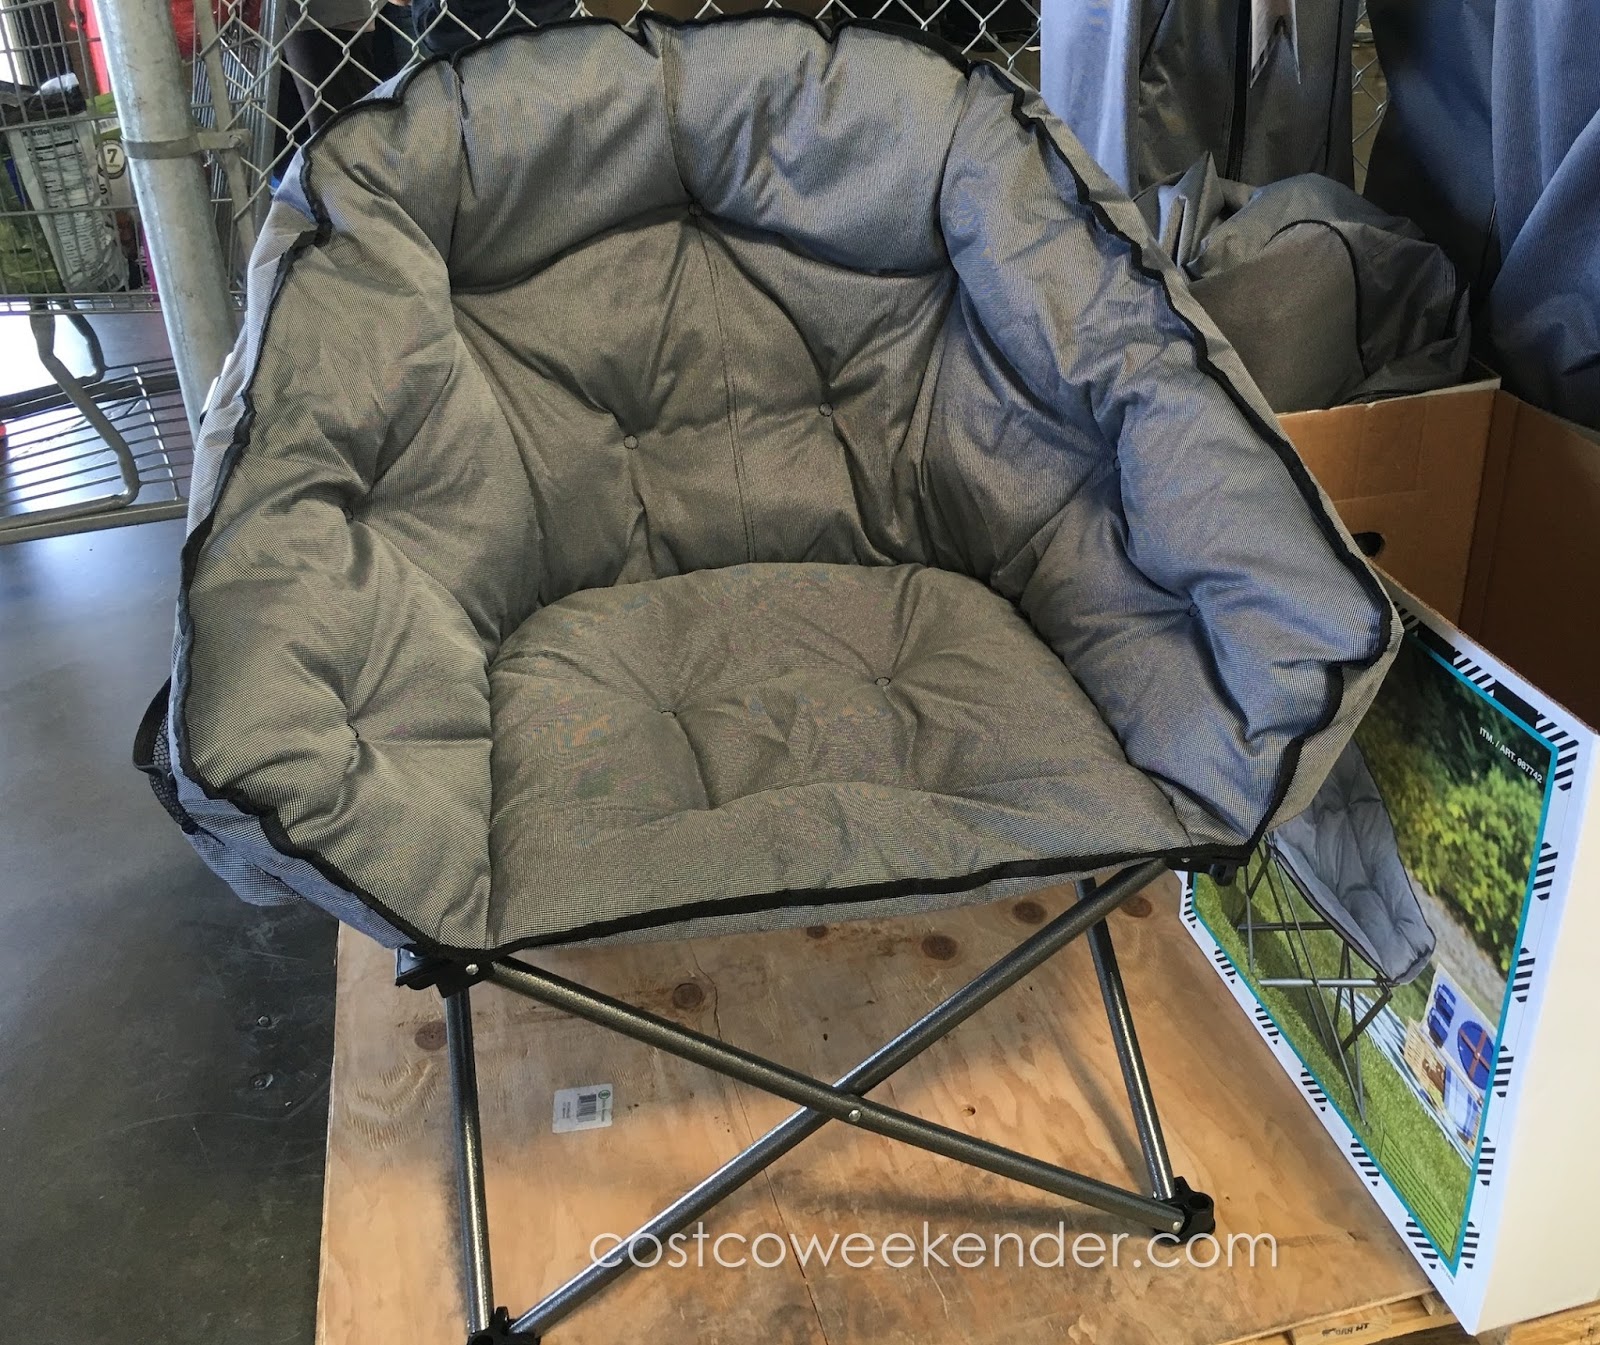 Tofasco Extra Padded Club Chair Costco Weekender